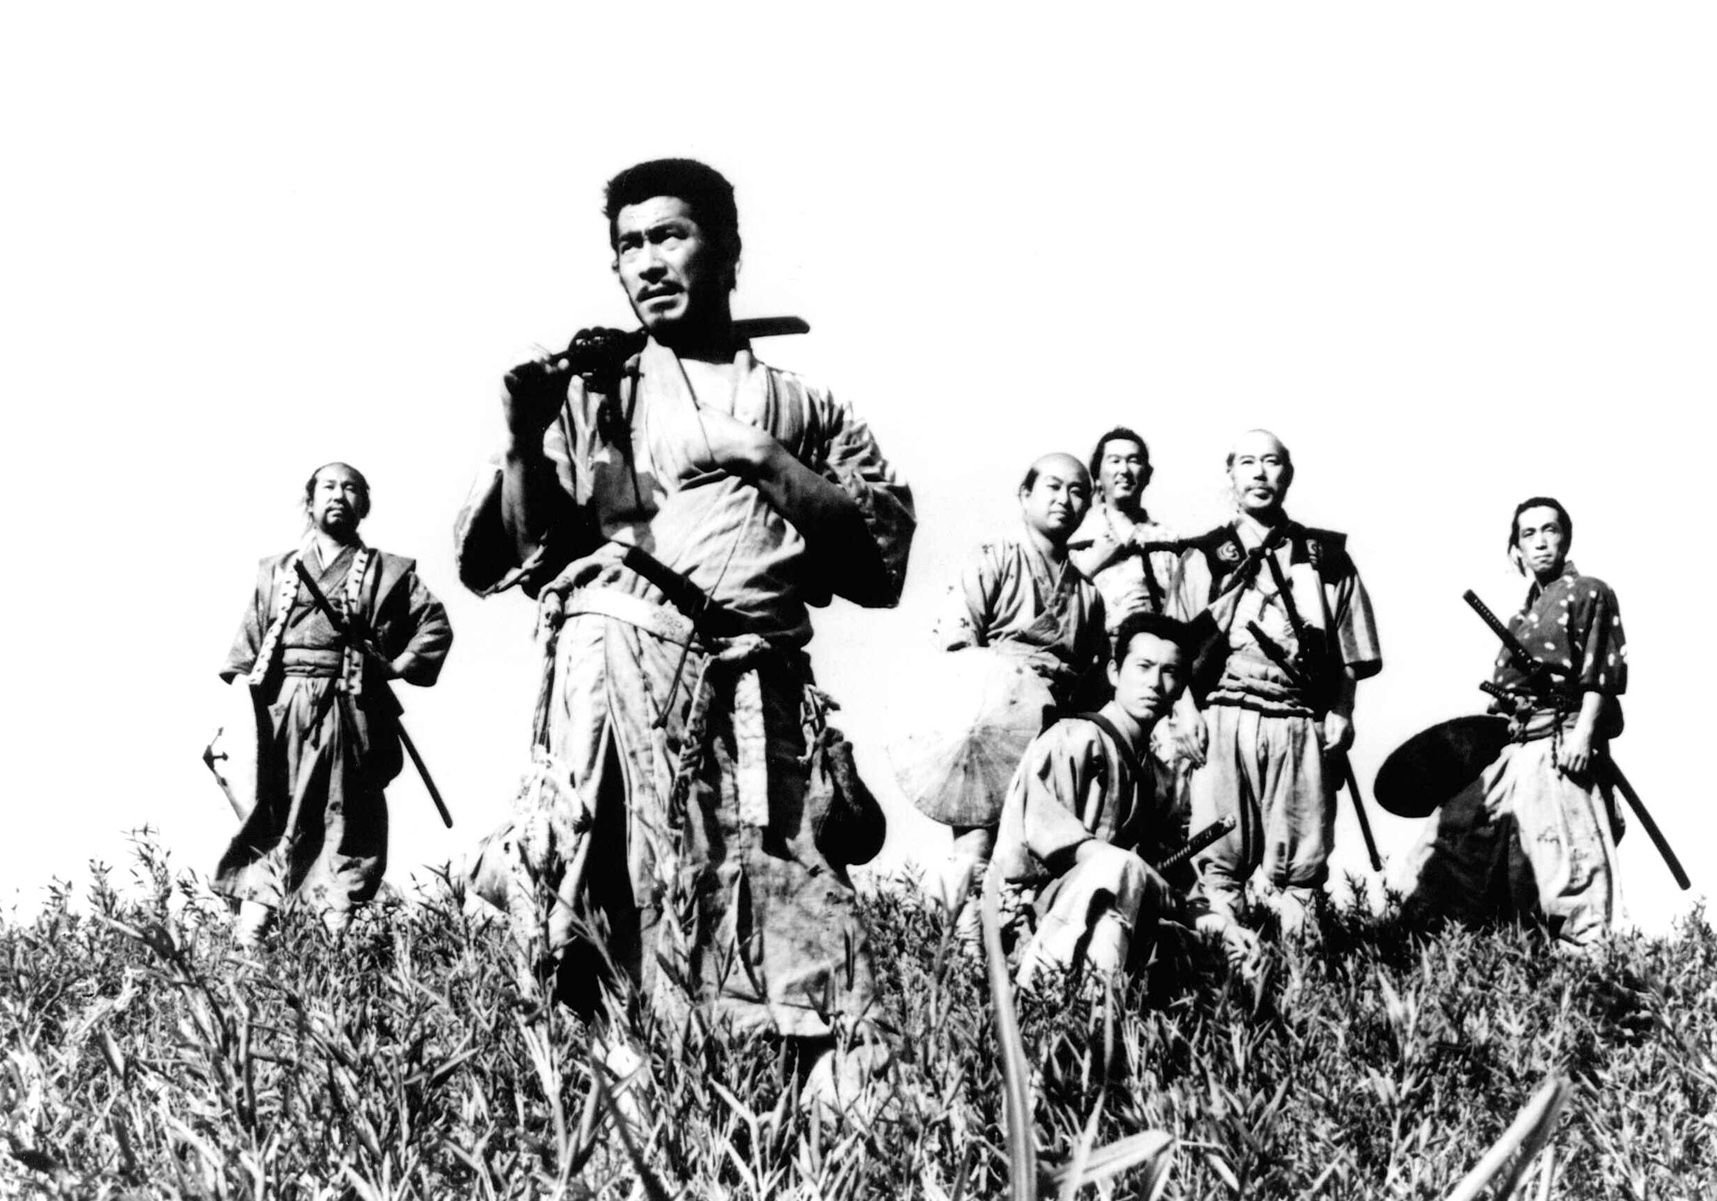 Mifune: Last Samurai